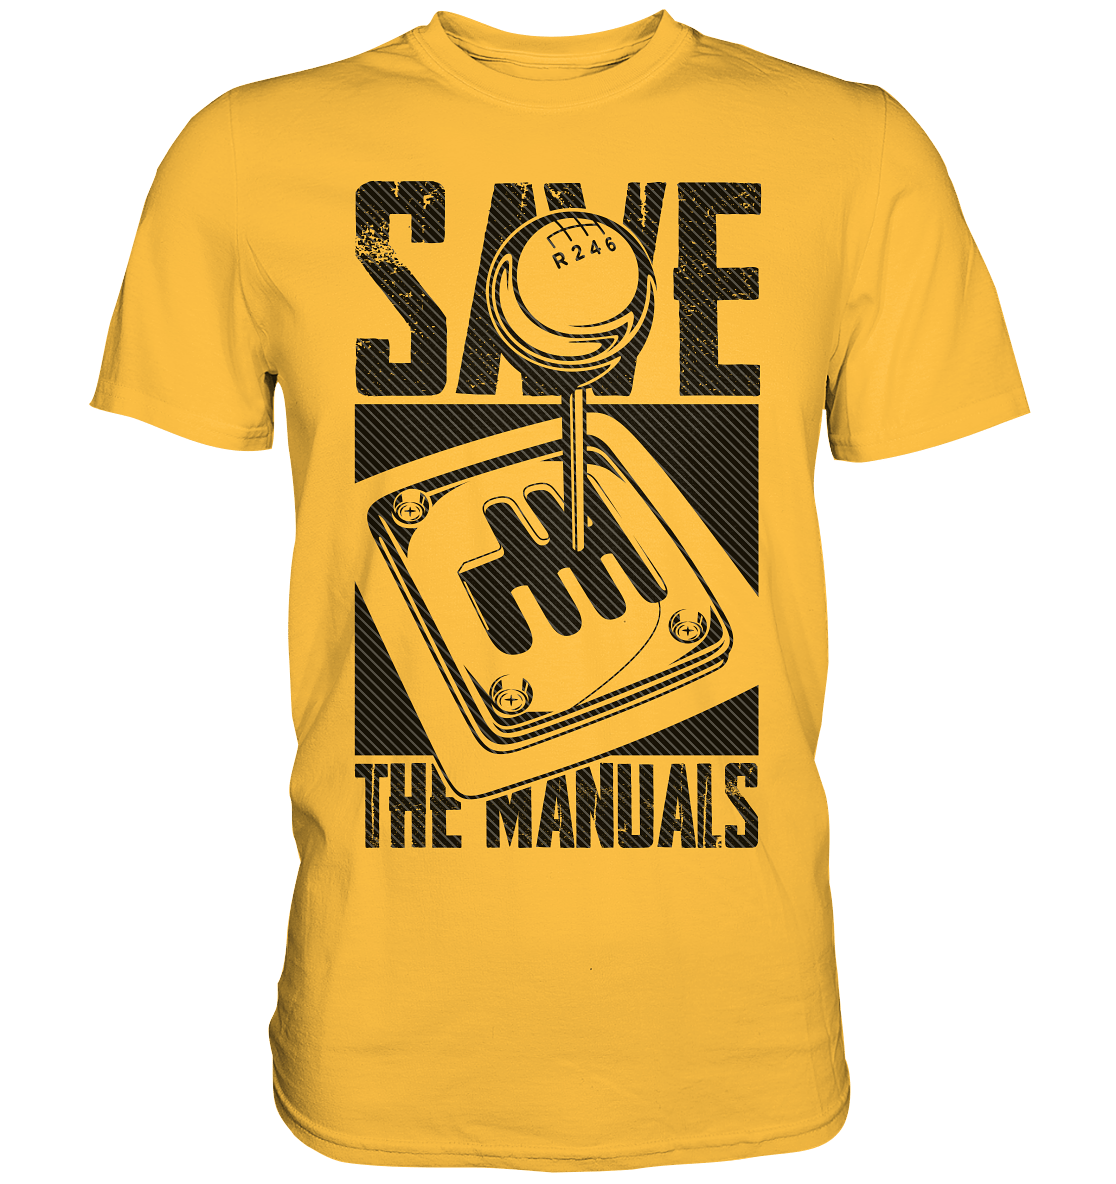 Save the Manuals dunkel - Premium Shirt - MotoMerch.de